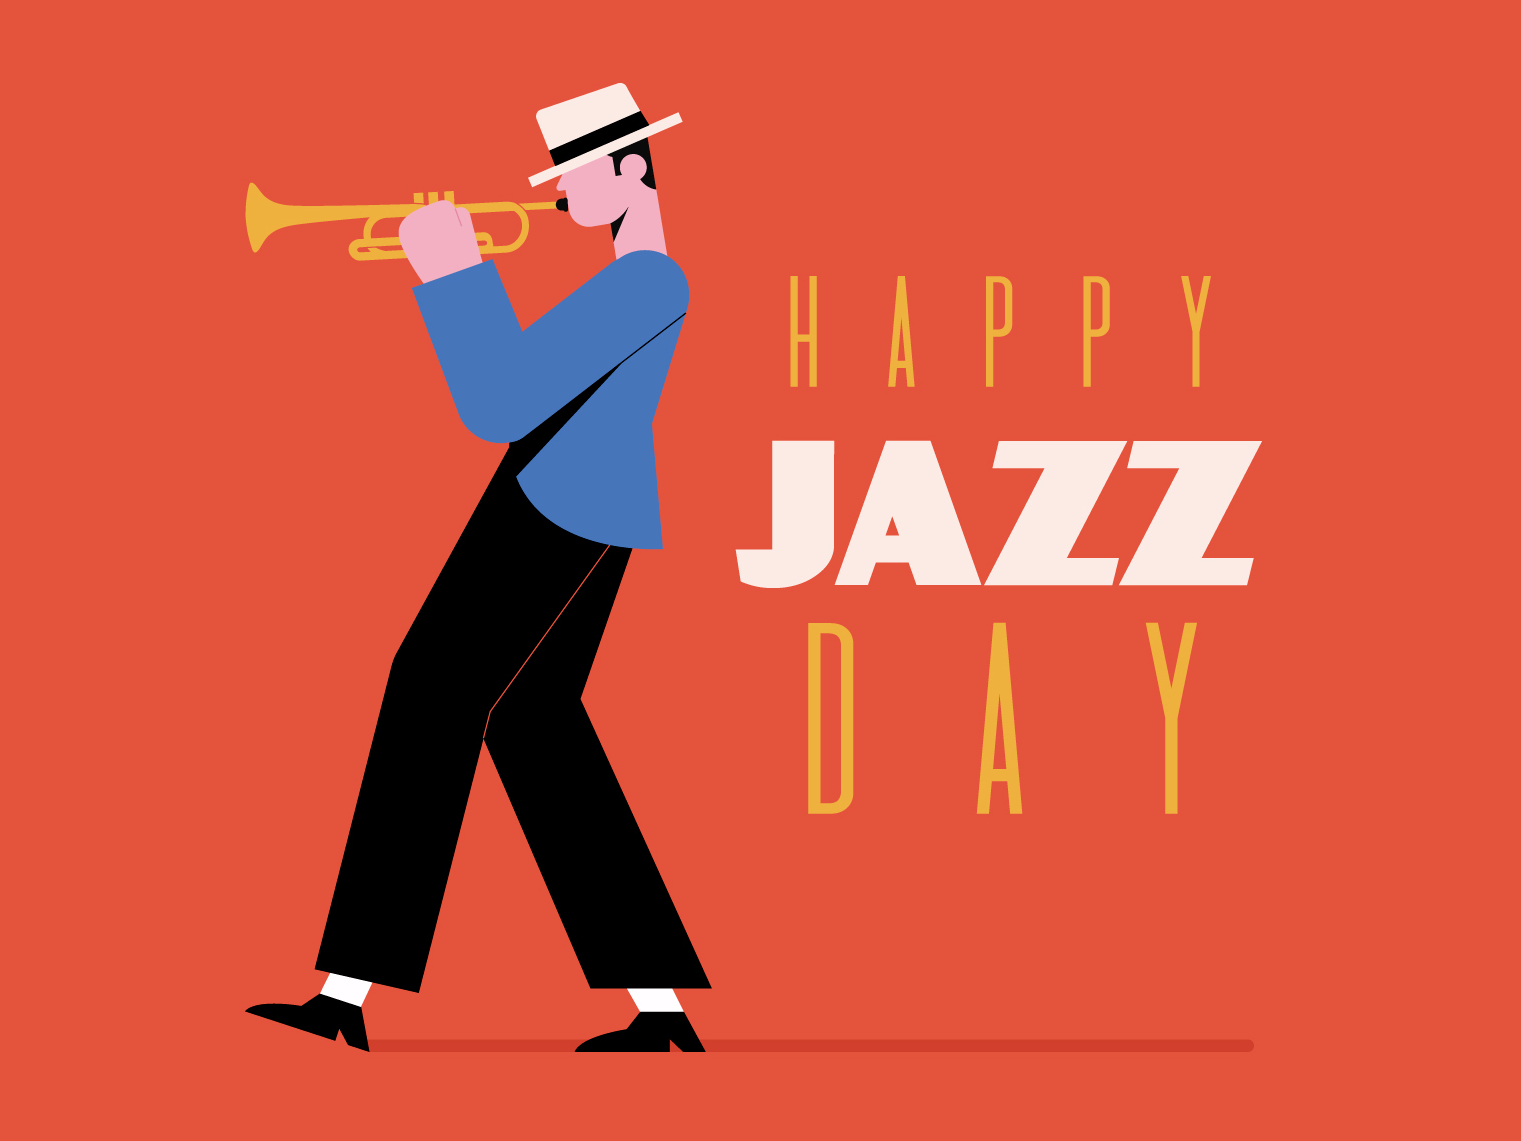 International jazz day by Jonathan Larenas on Dribbble